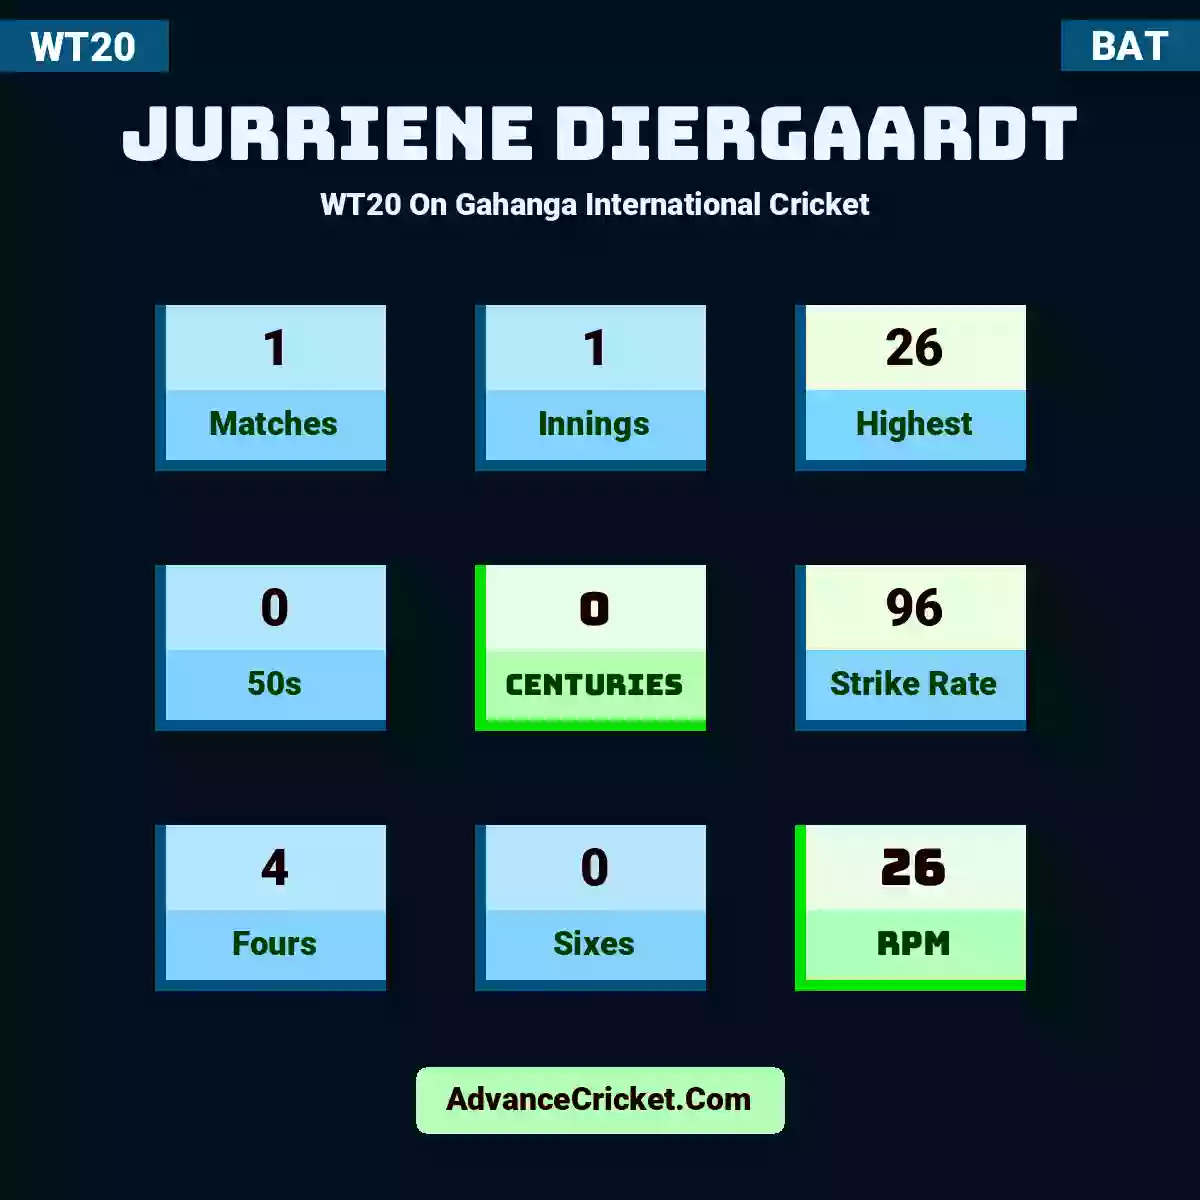 Jurriene Diergaardt WT20  On Gahanga International Cricket , Jurriene Diergaardt played 1 matches, scored 26 runs as highest, 0 half-centuries, and 0 centuries, with a strike rate of 96. J.Diergaardt hit 4 fours and 0 sixes, with an RPM of 26.